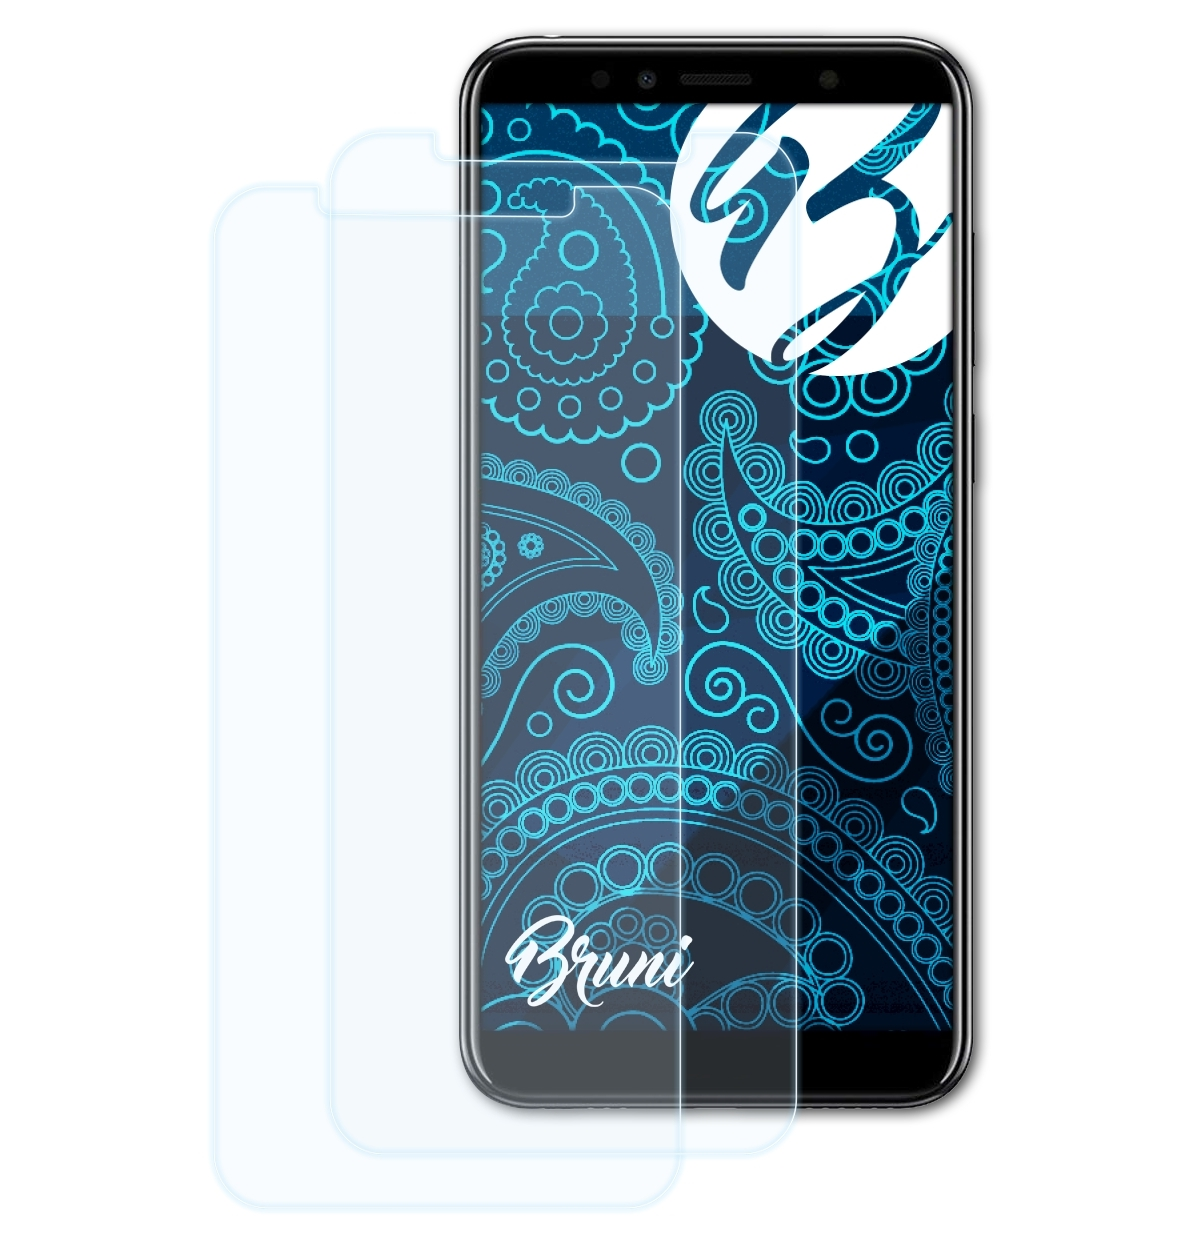 BRUNI 2x Basics-Clear Schutzfolie(für Honor 7A) Huawei